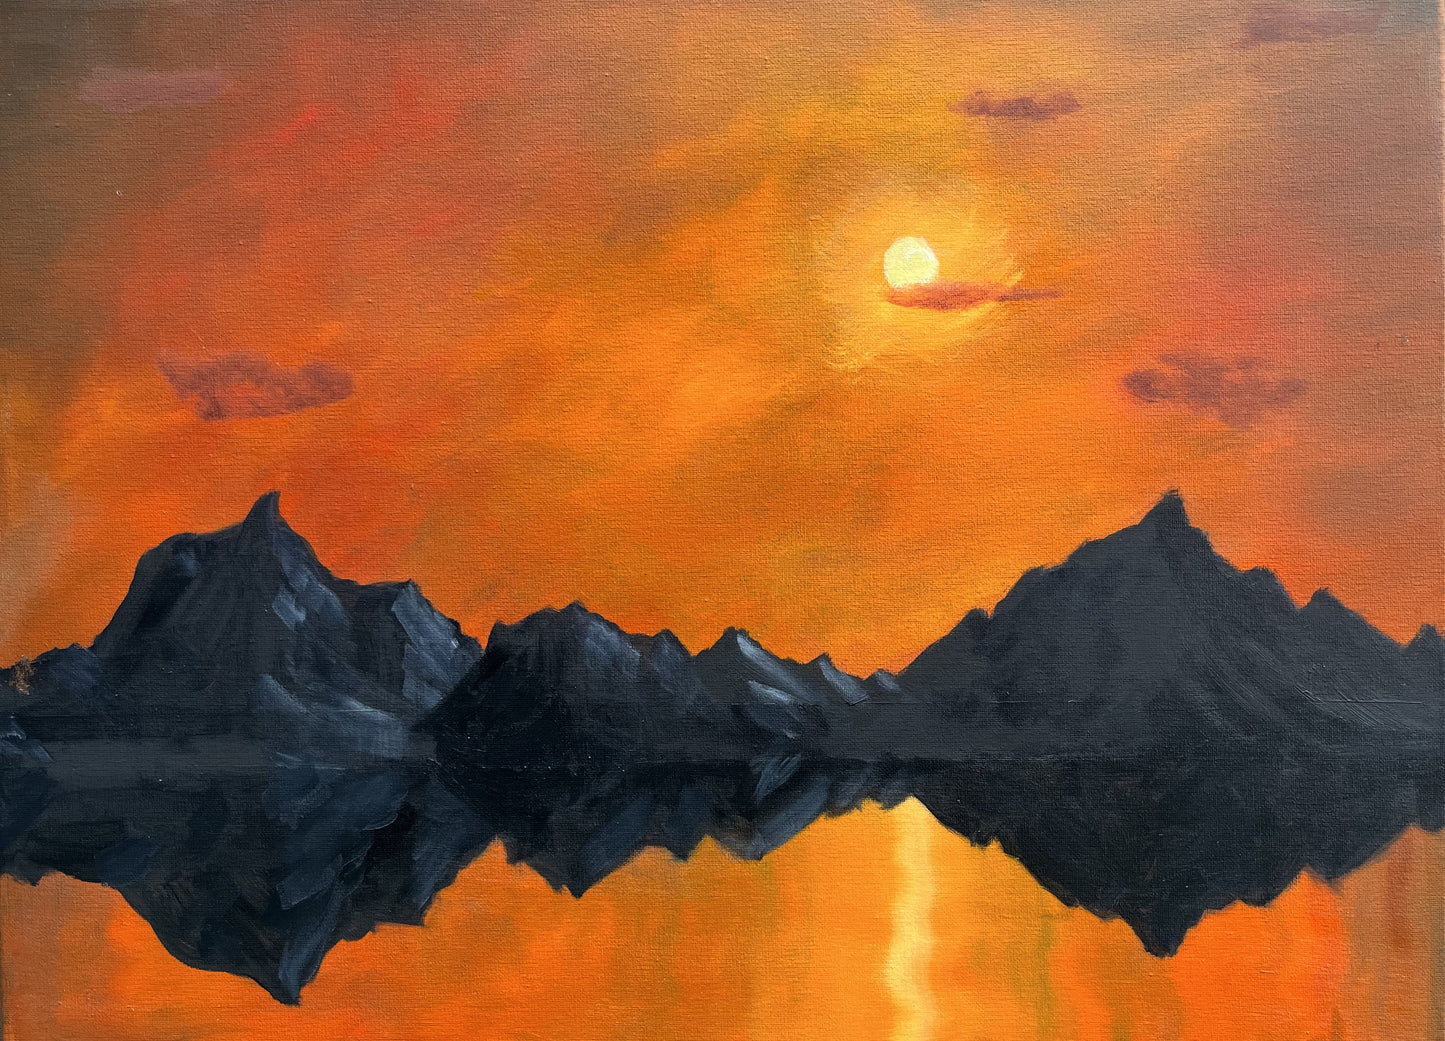 Burning skies fantasy landscape original oil painting